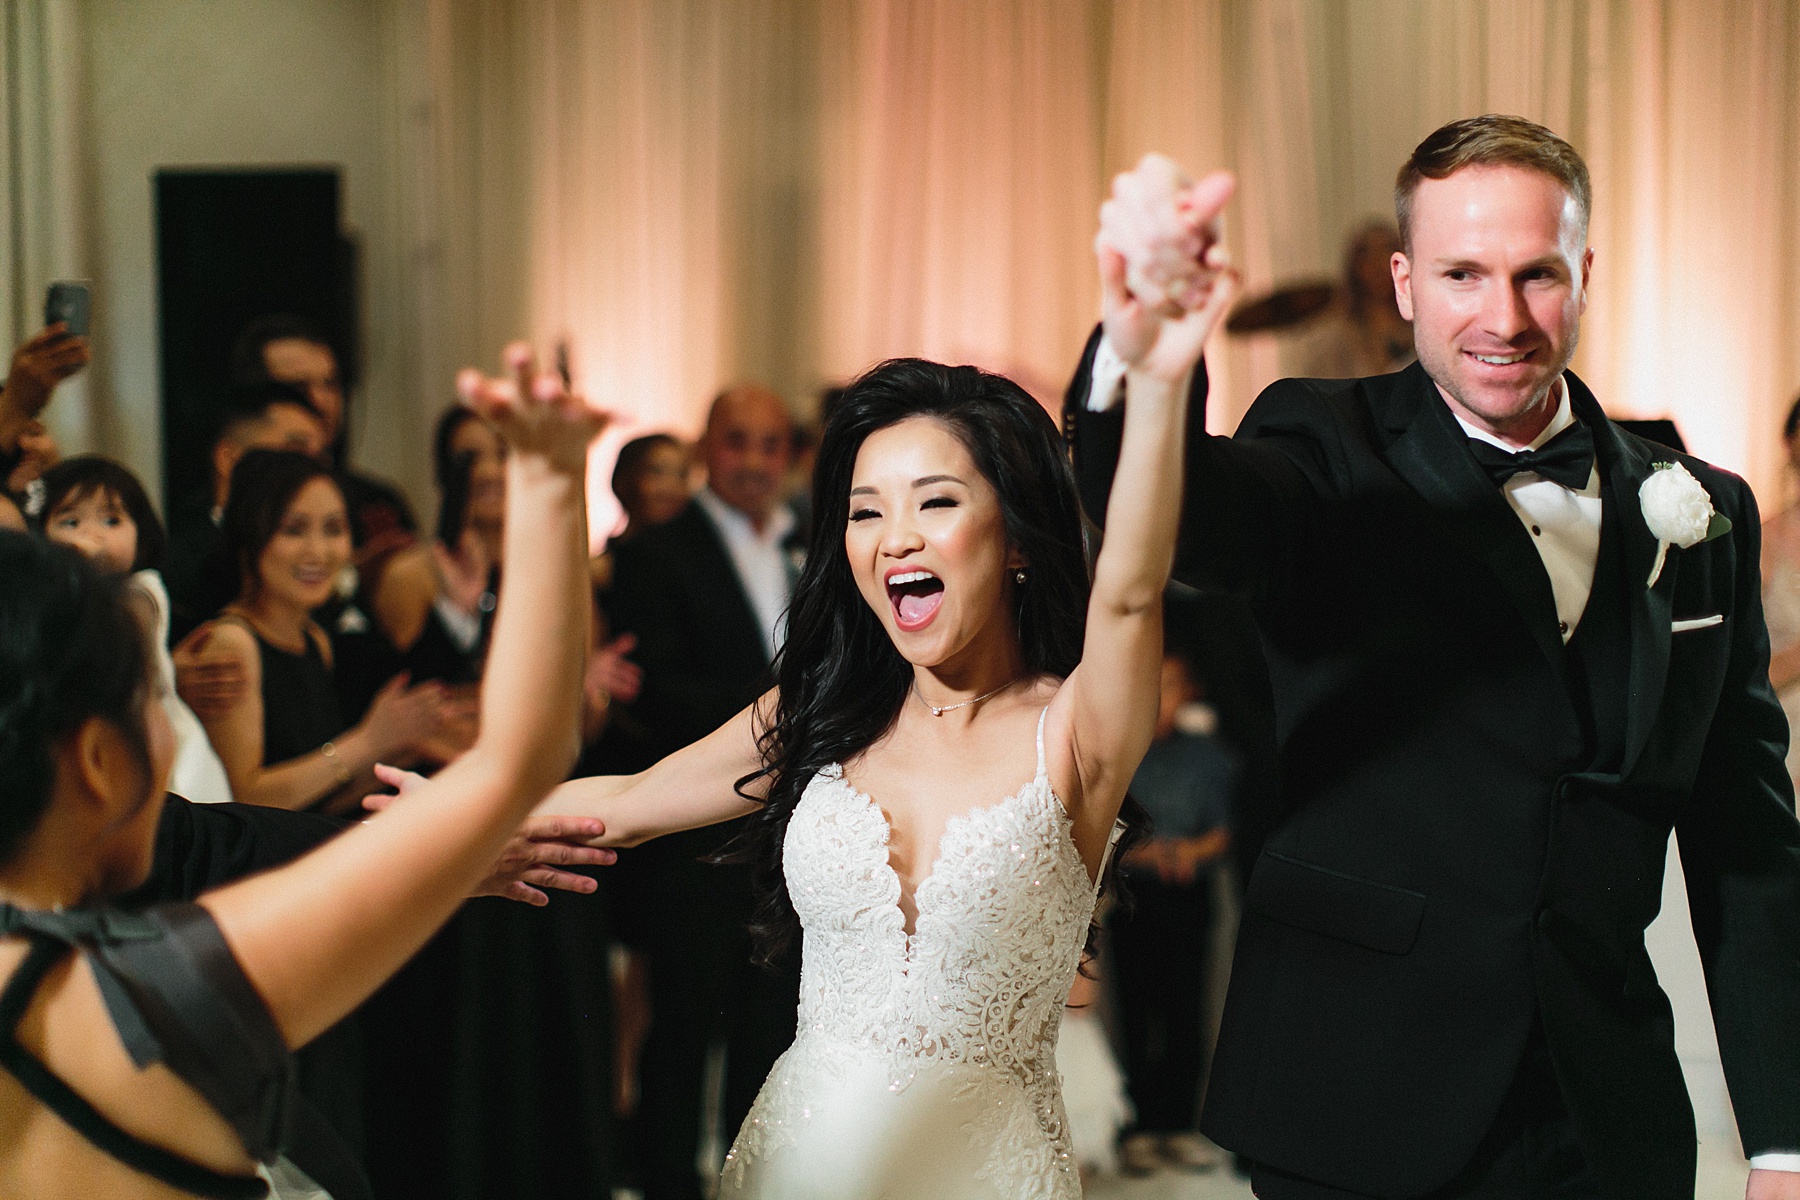 Smiles all around as the bride and groom enjoy their wedding reception at the Four Seasons Houston